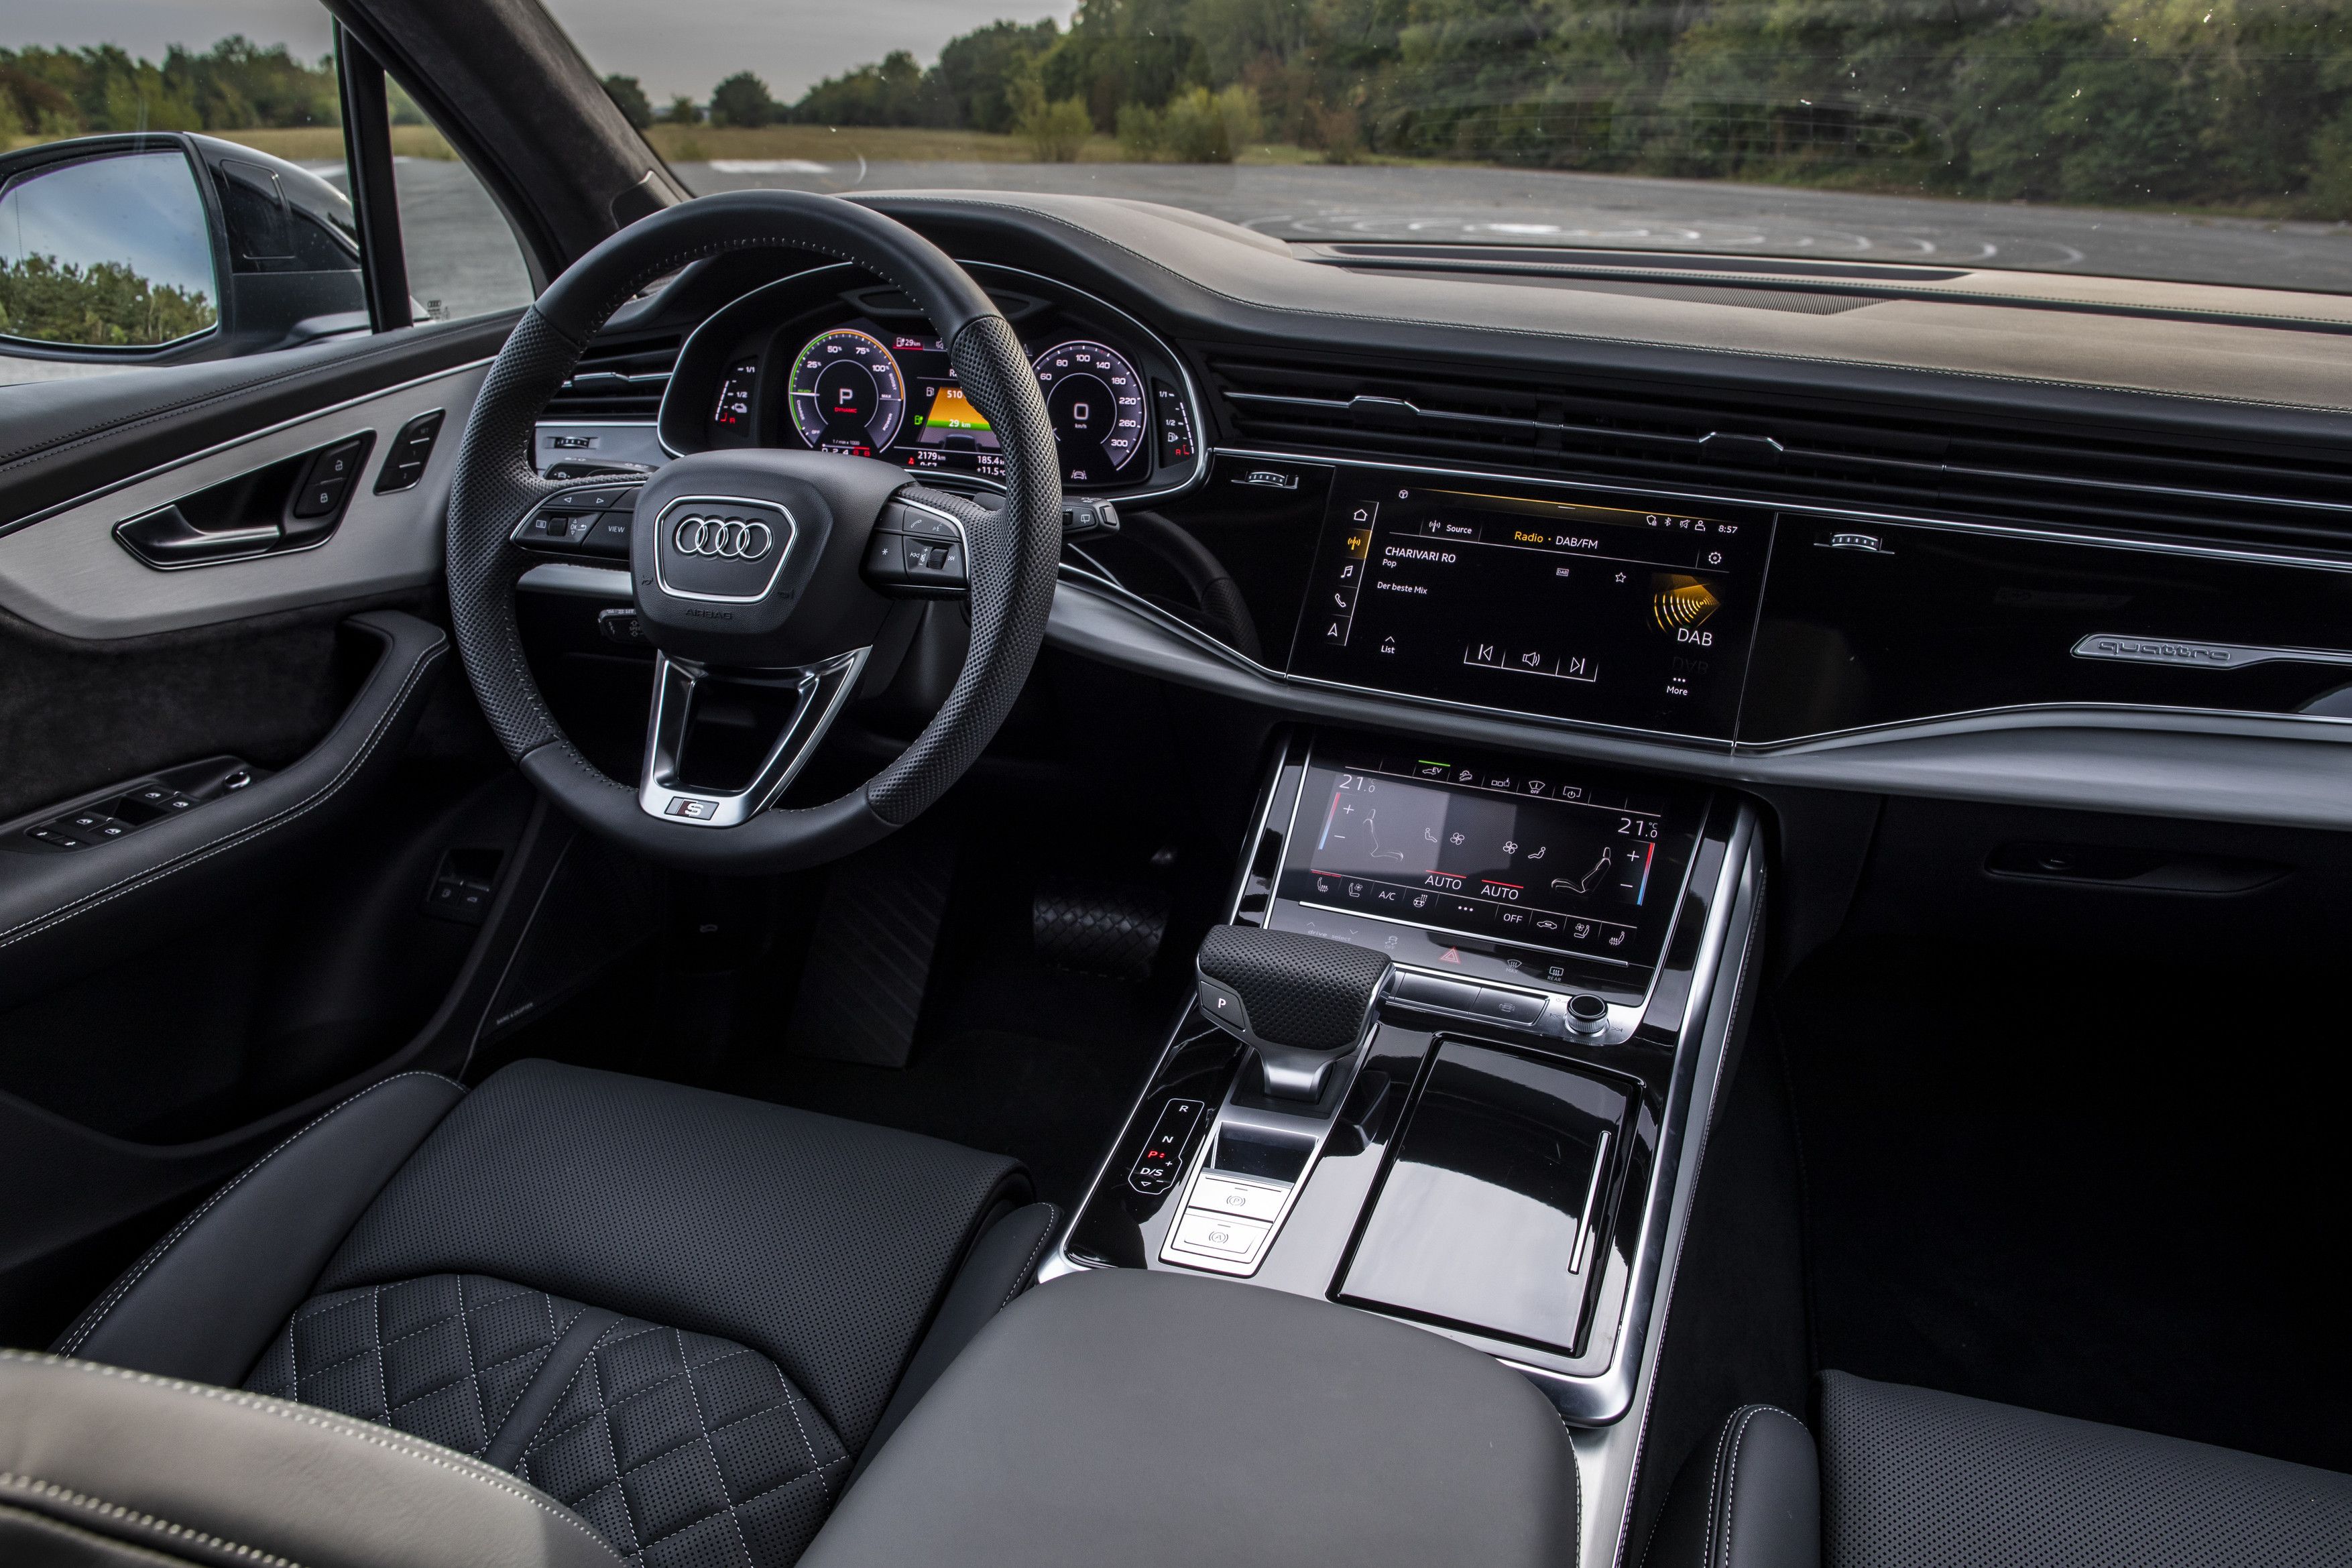 Audi Q7 Interior Length Home Alqu